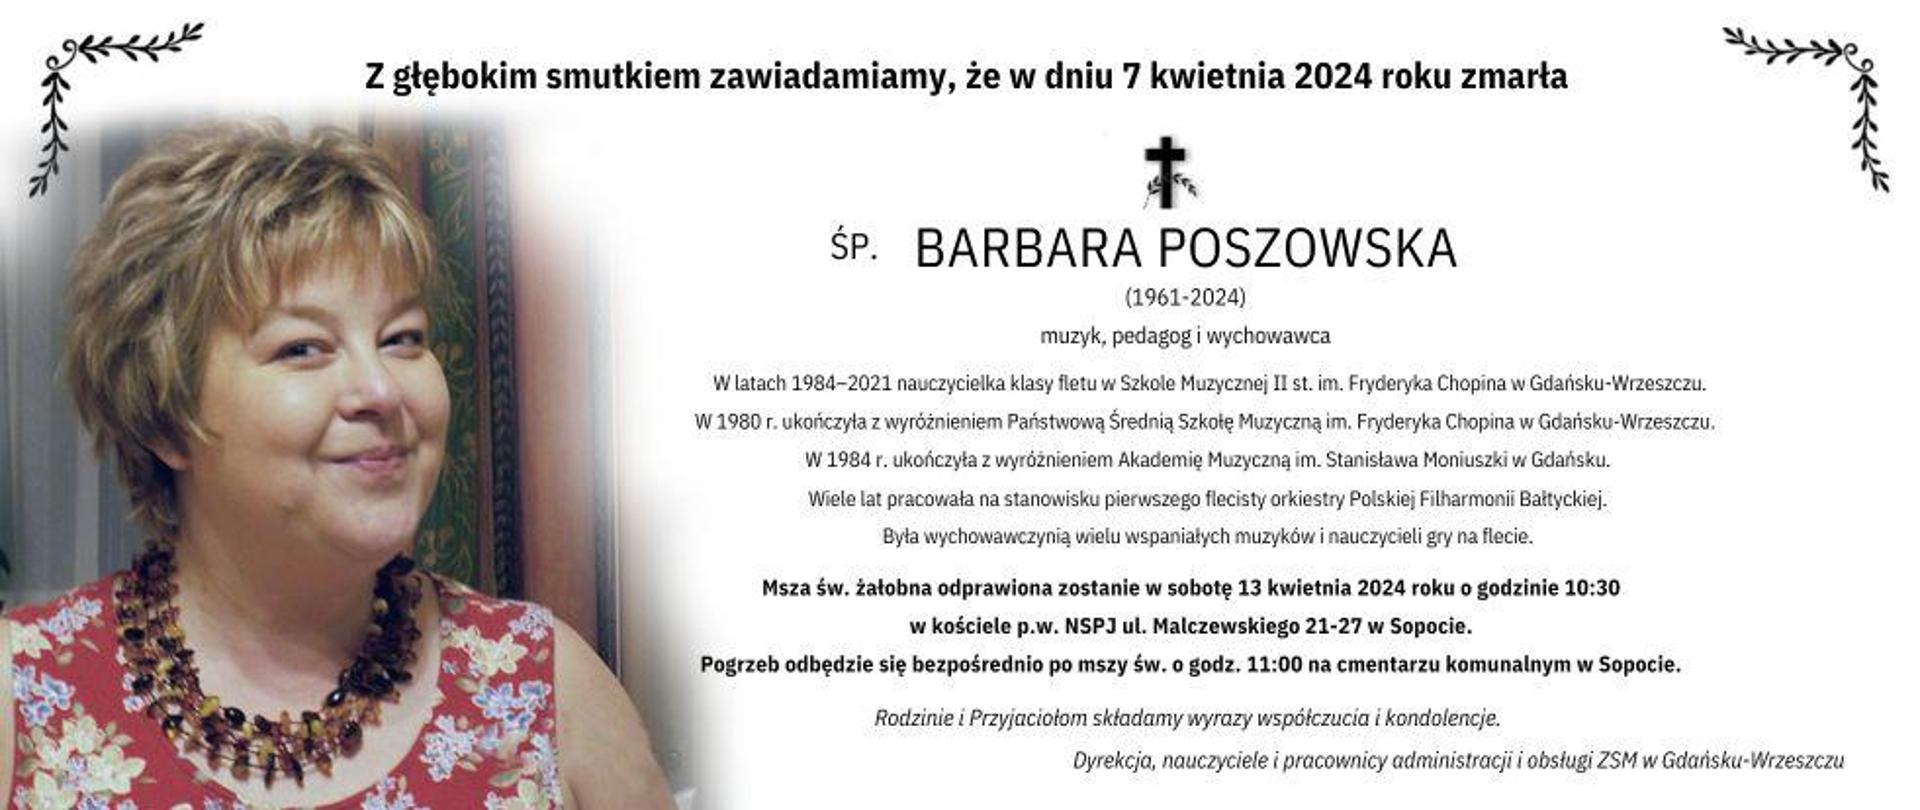 Barbara Poszowska